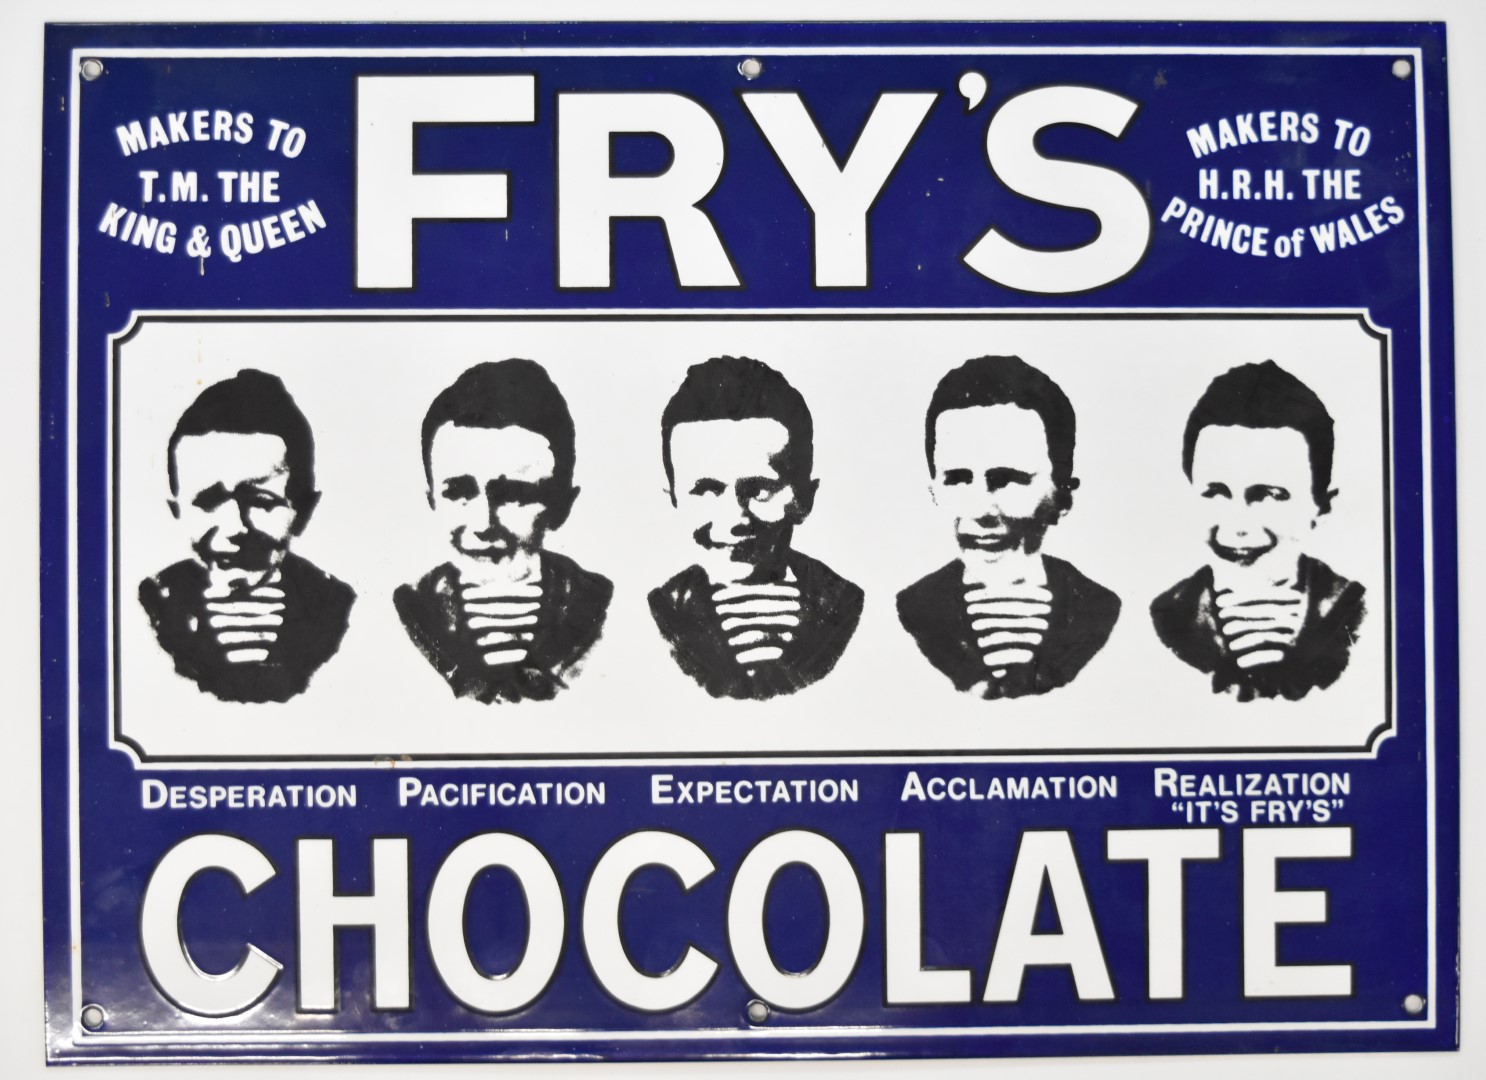 Fry's Chocolate enamel advertising sign, 38 x 51cm